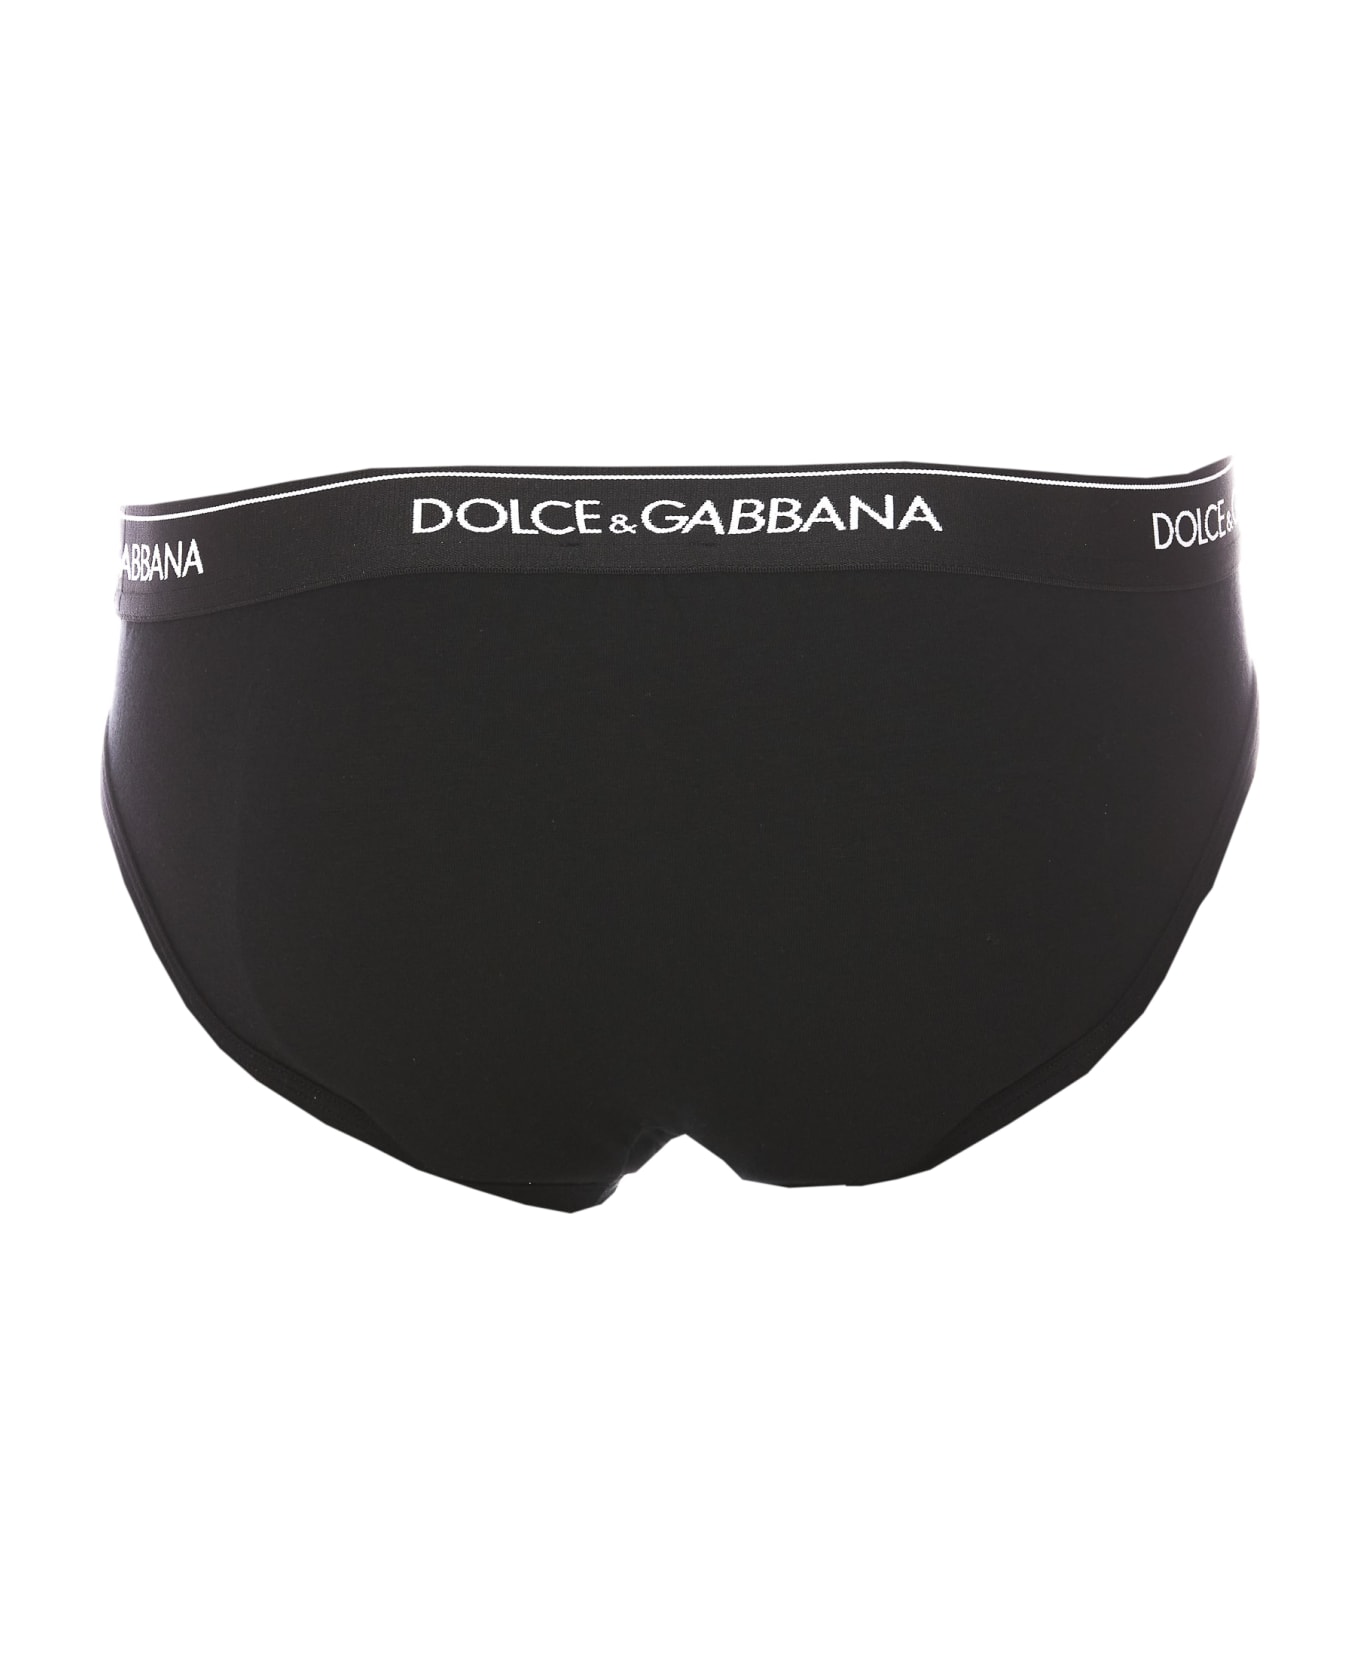 Dolce & Gabbana Logo Bipack Brief - BLACK ショーツ